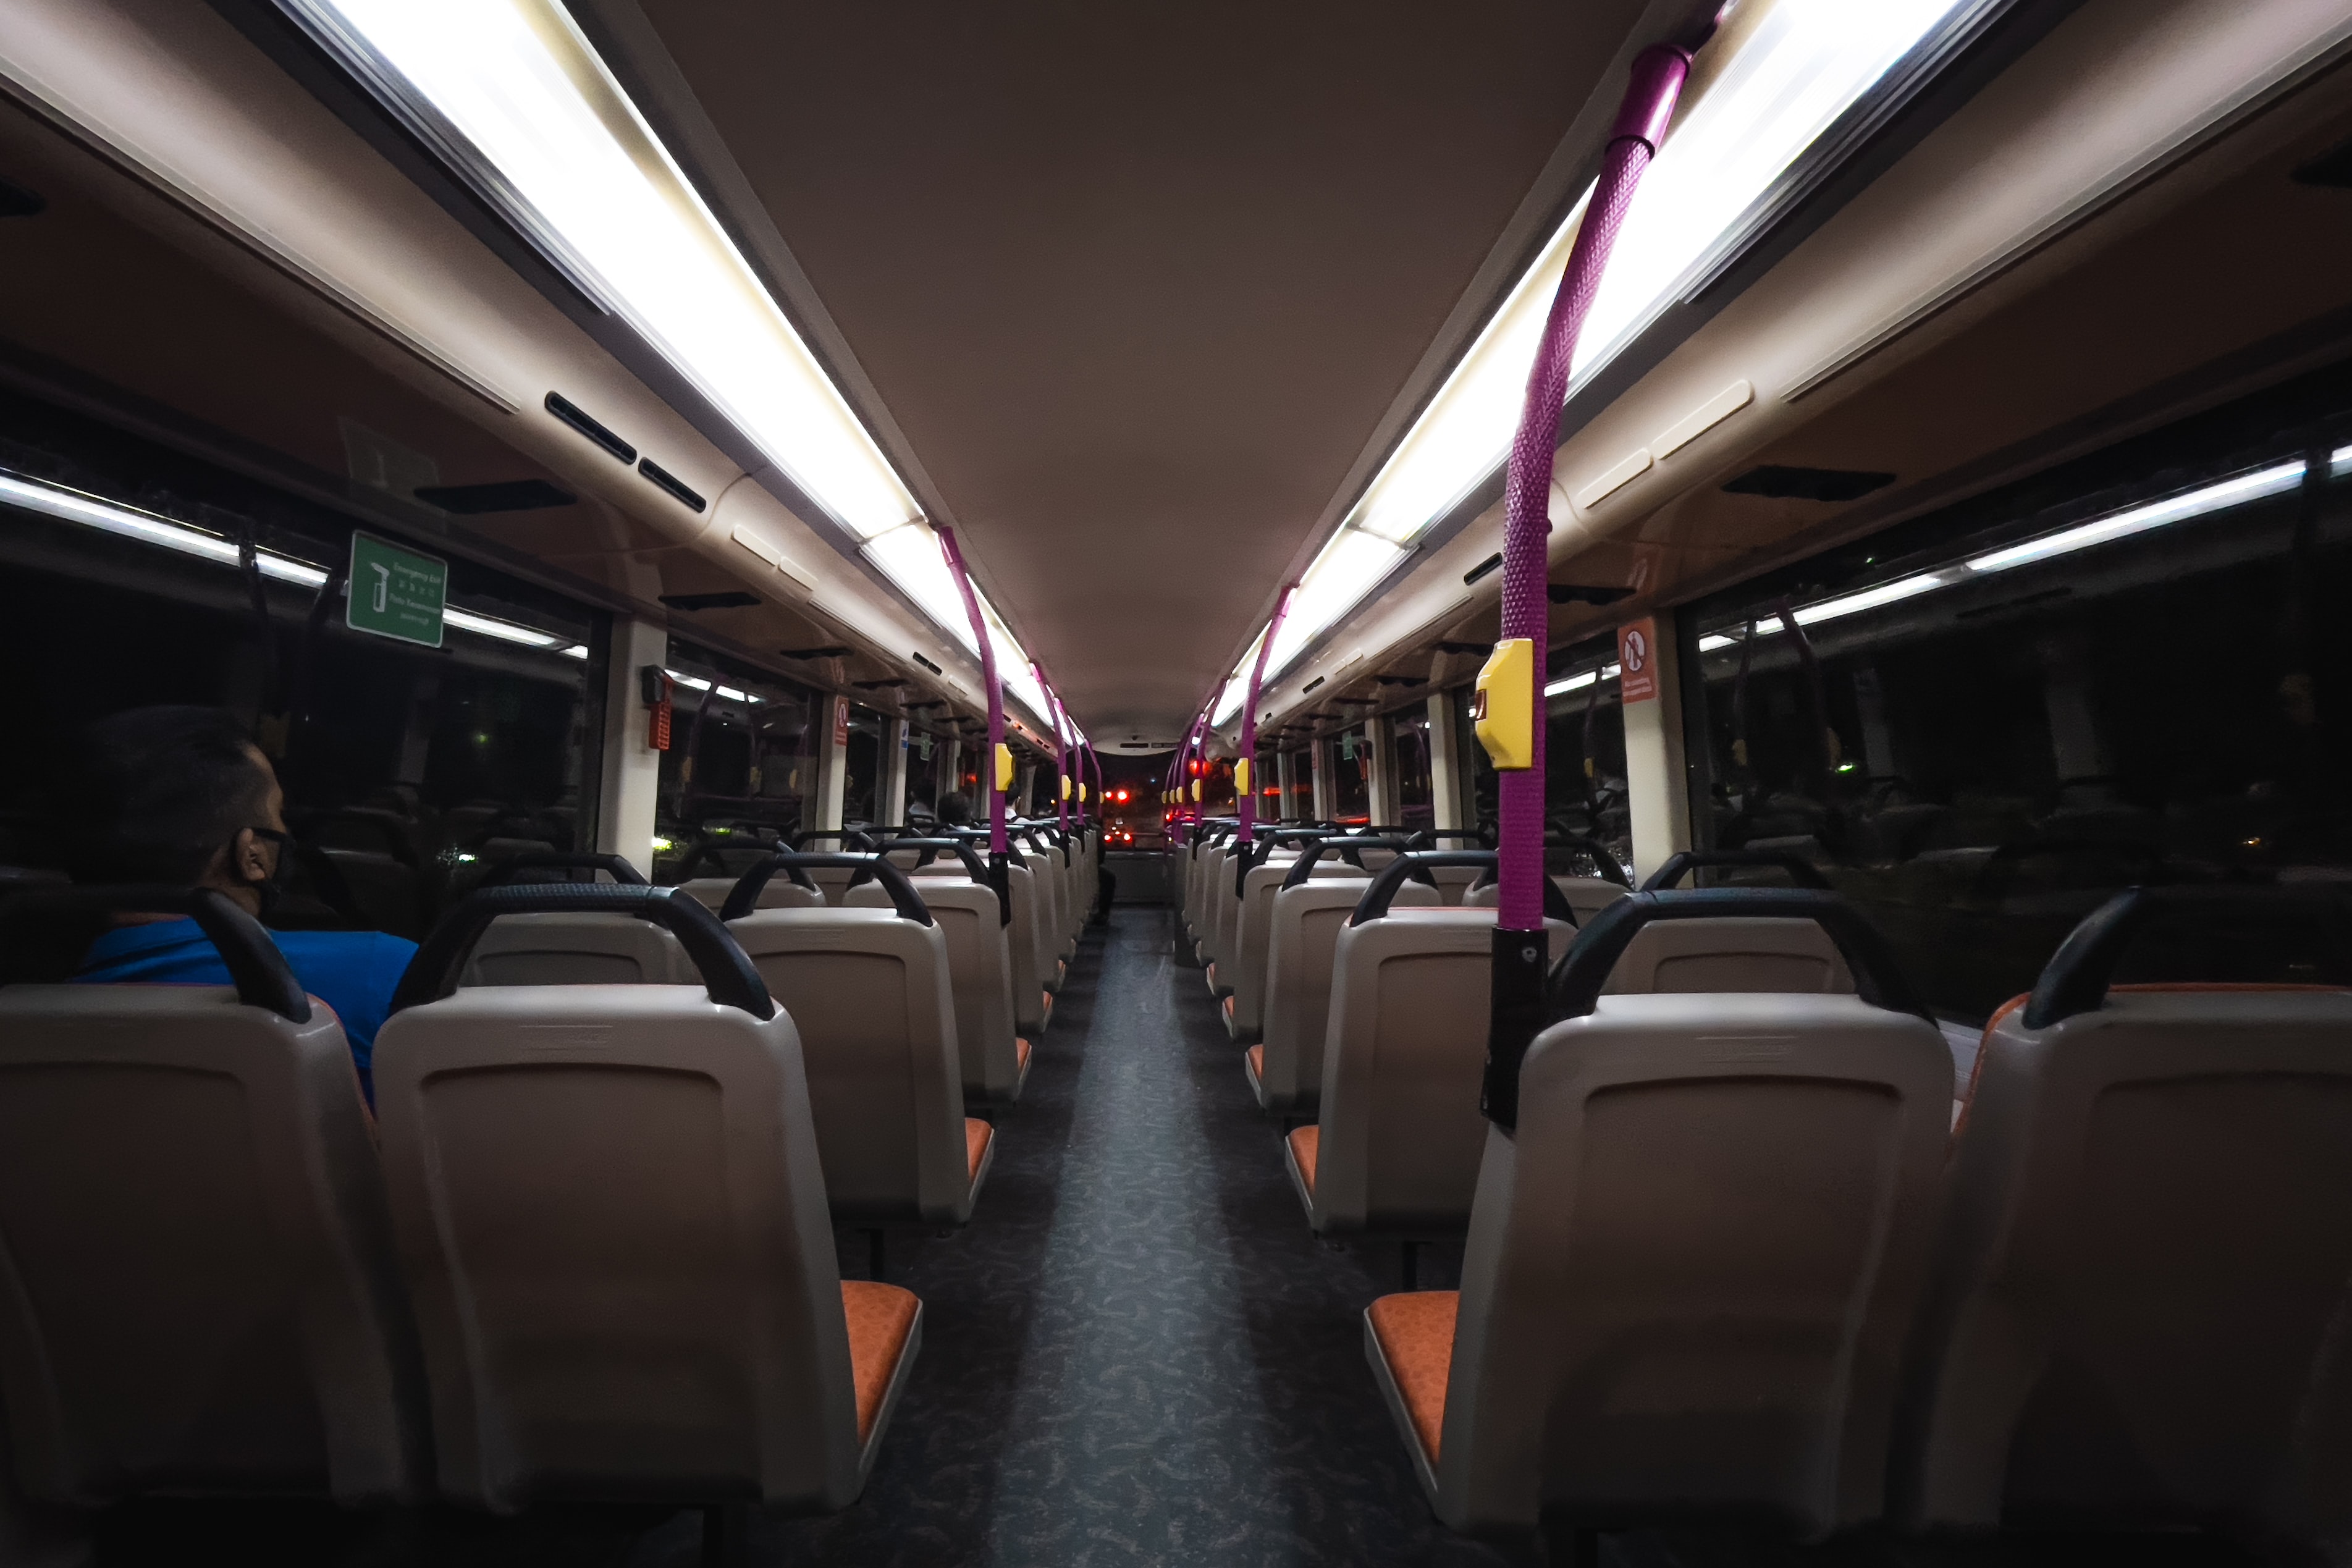 56 passengers charter bus service in the Atlanta area